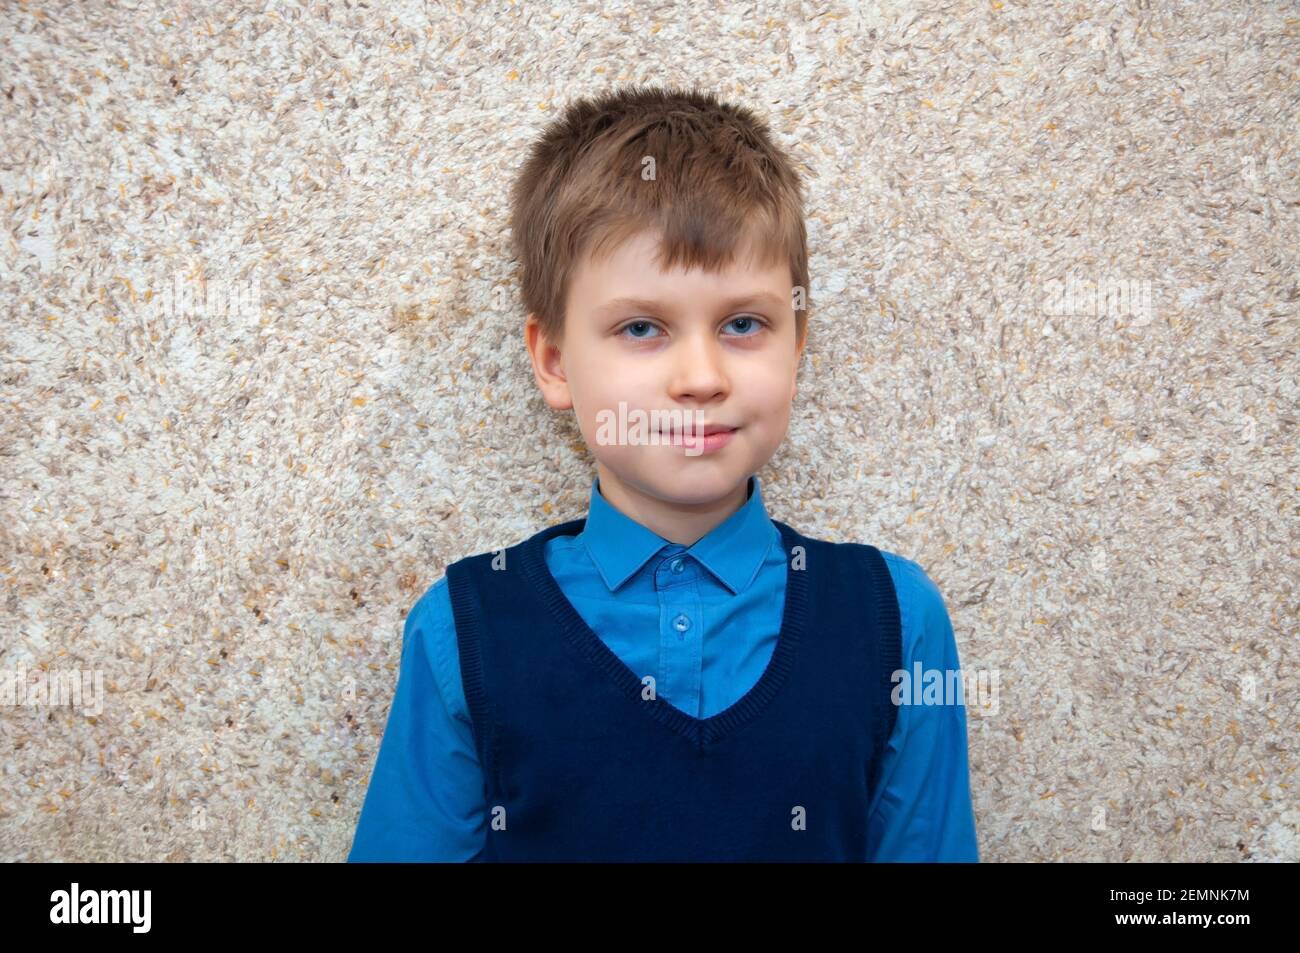 Boy student in school uniform smiling. Stock Photo